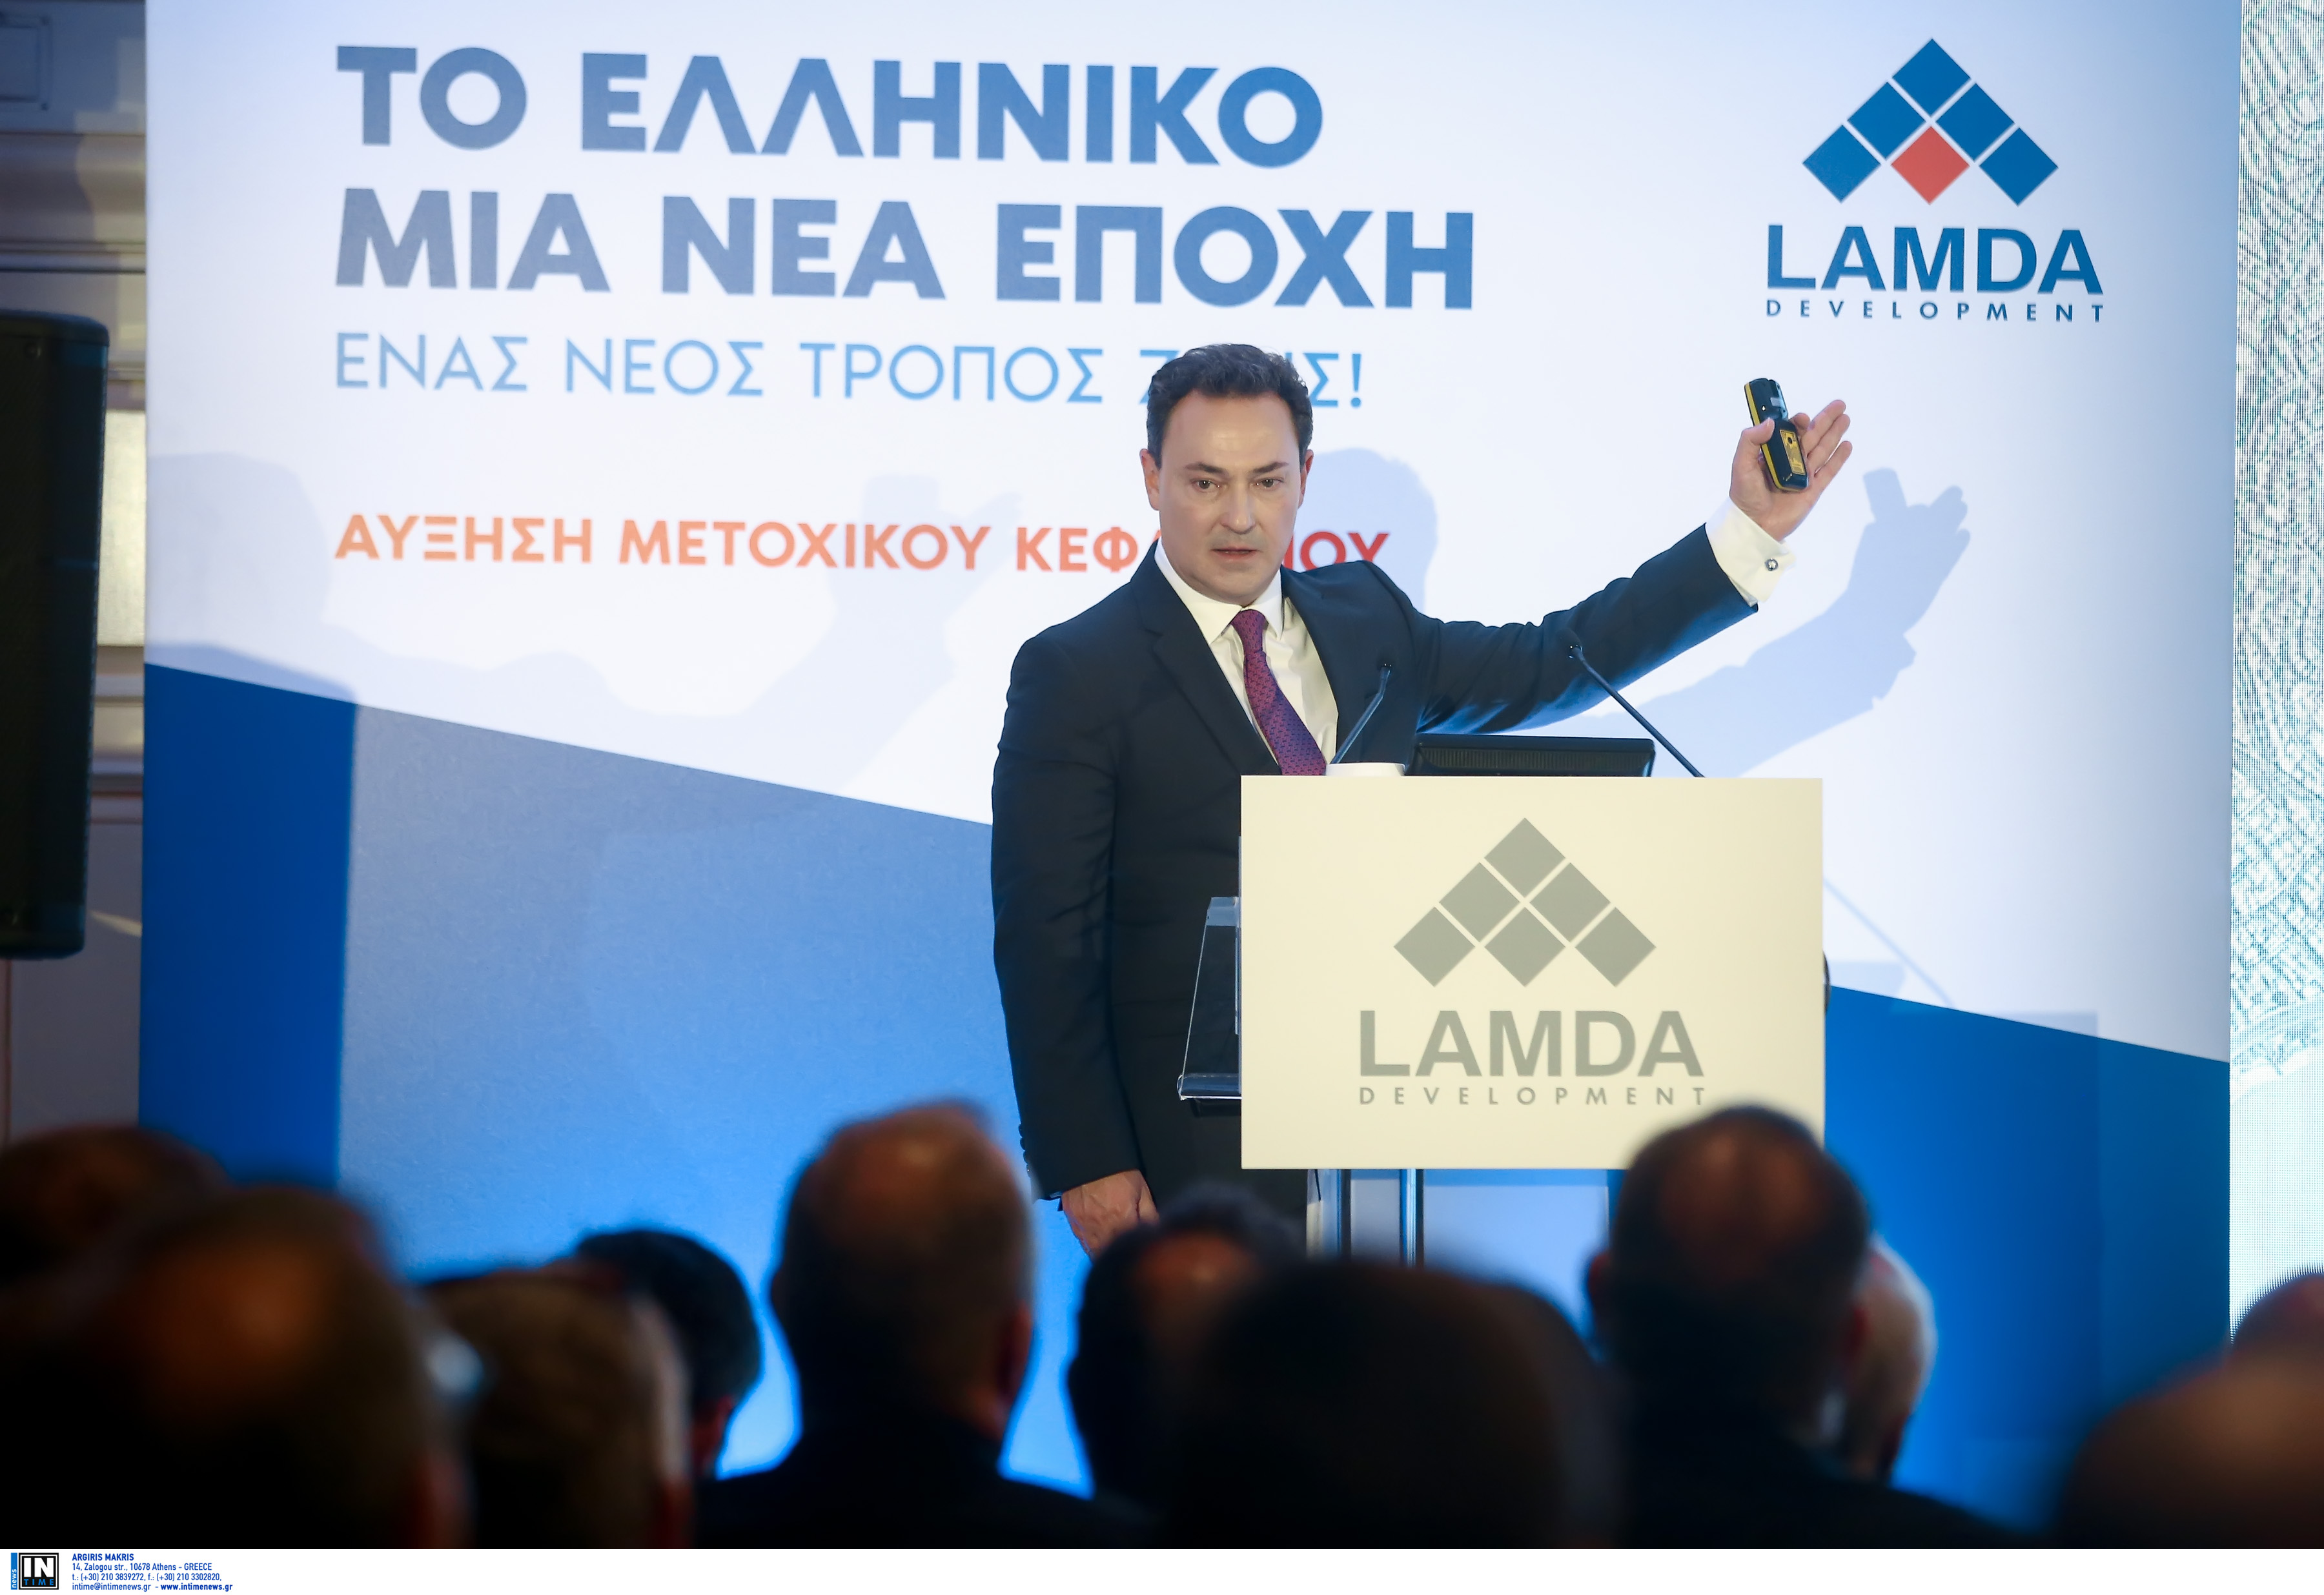 Lamda Development: Πως φτάσαμε σε μια τόσο επιτυχημένη αύξηση μετοχικού κεφαλαίου